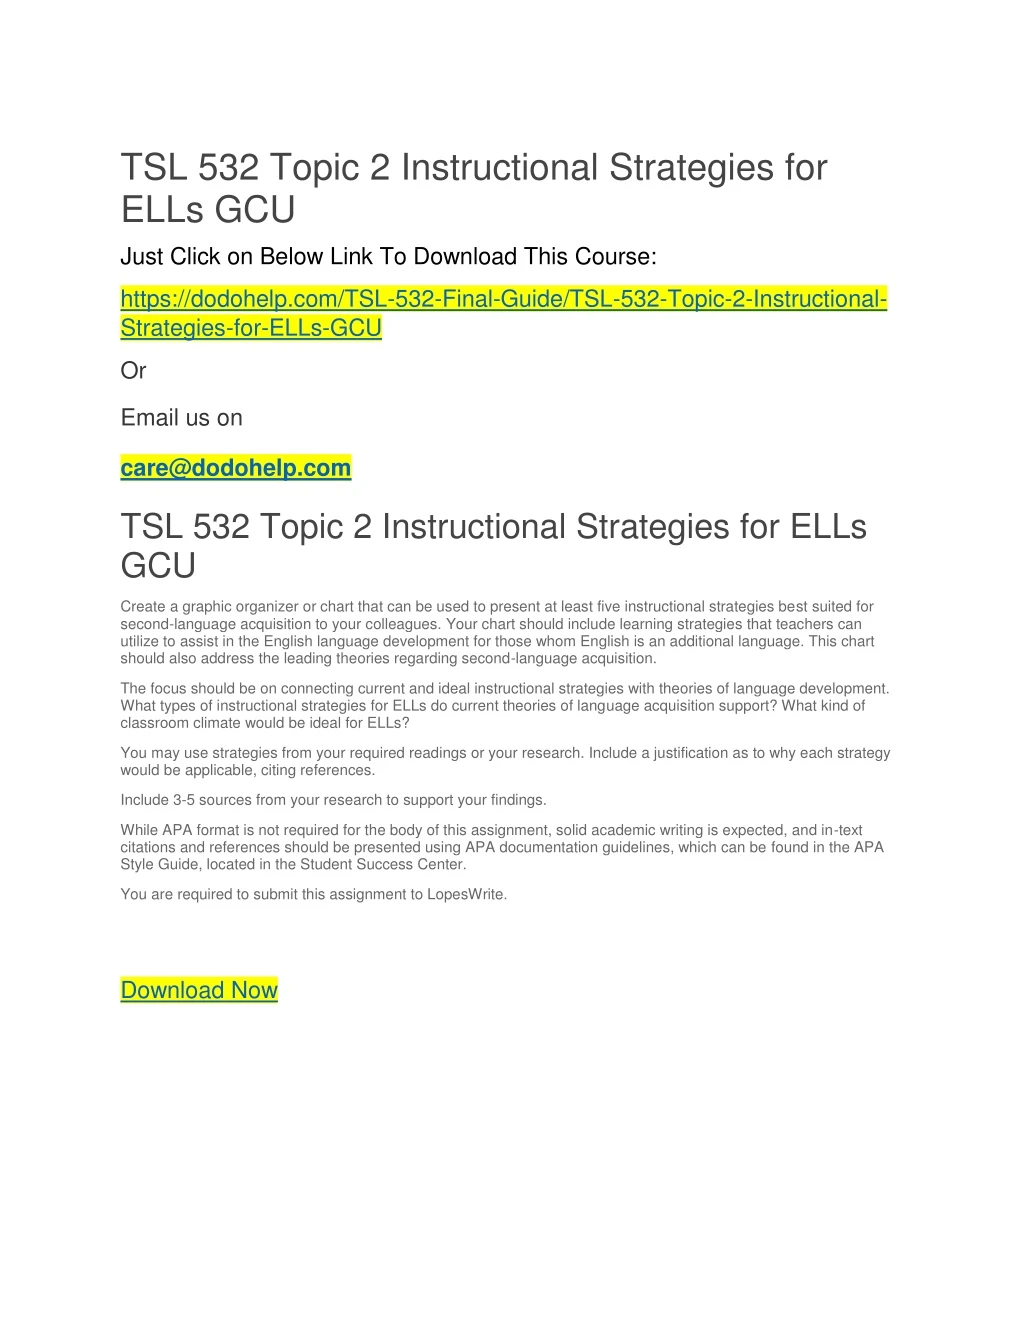 tsl 532 topic 2 instructional strategies for ells